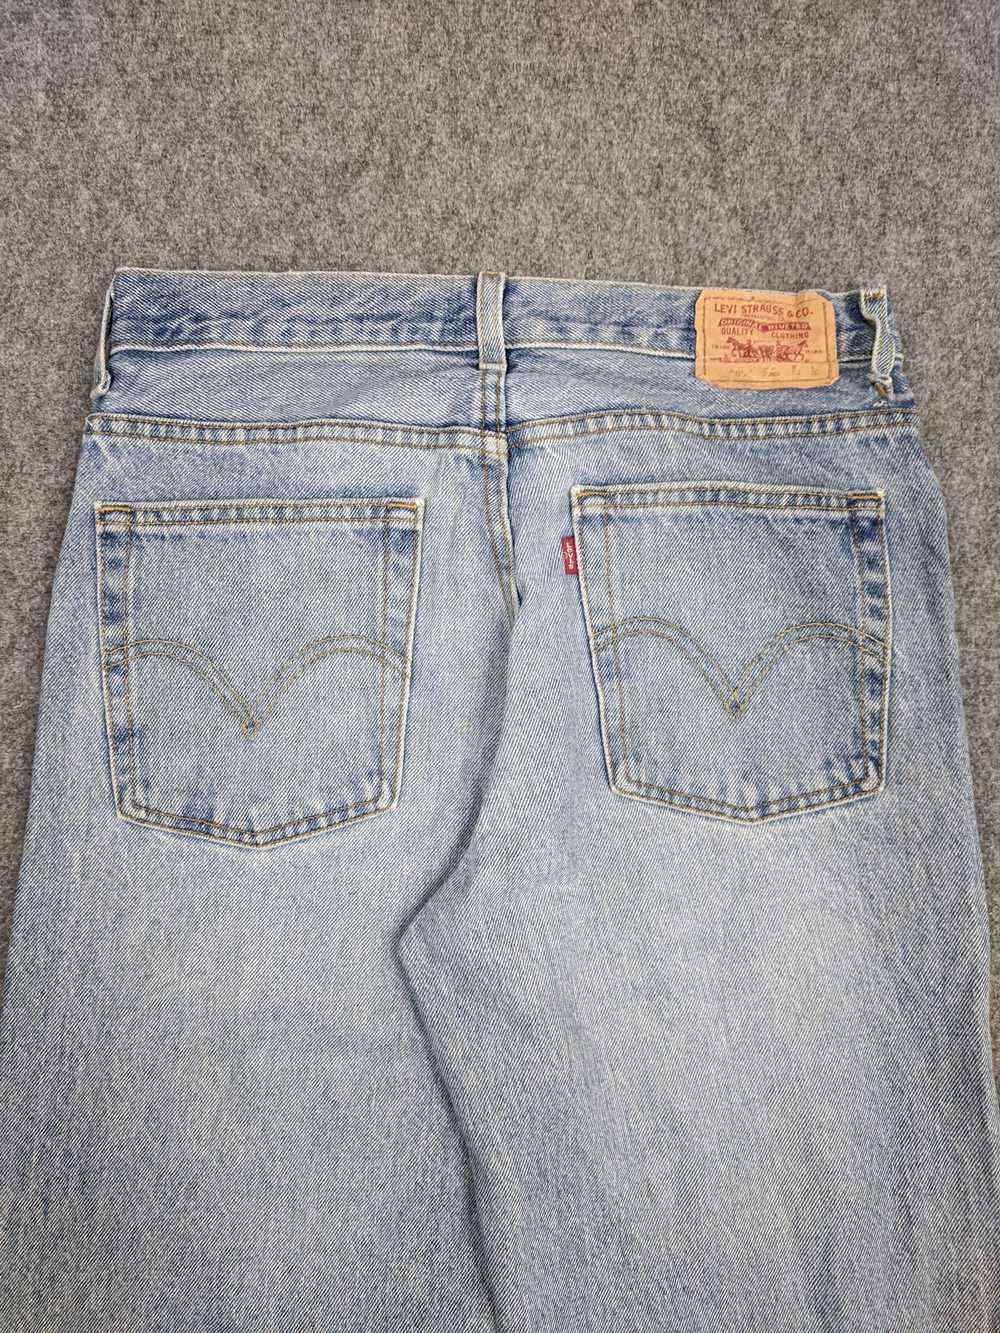 Vintage - Vintage Levis 569 Jeans - image 4